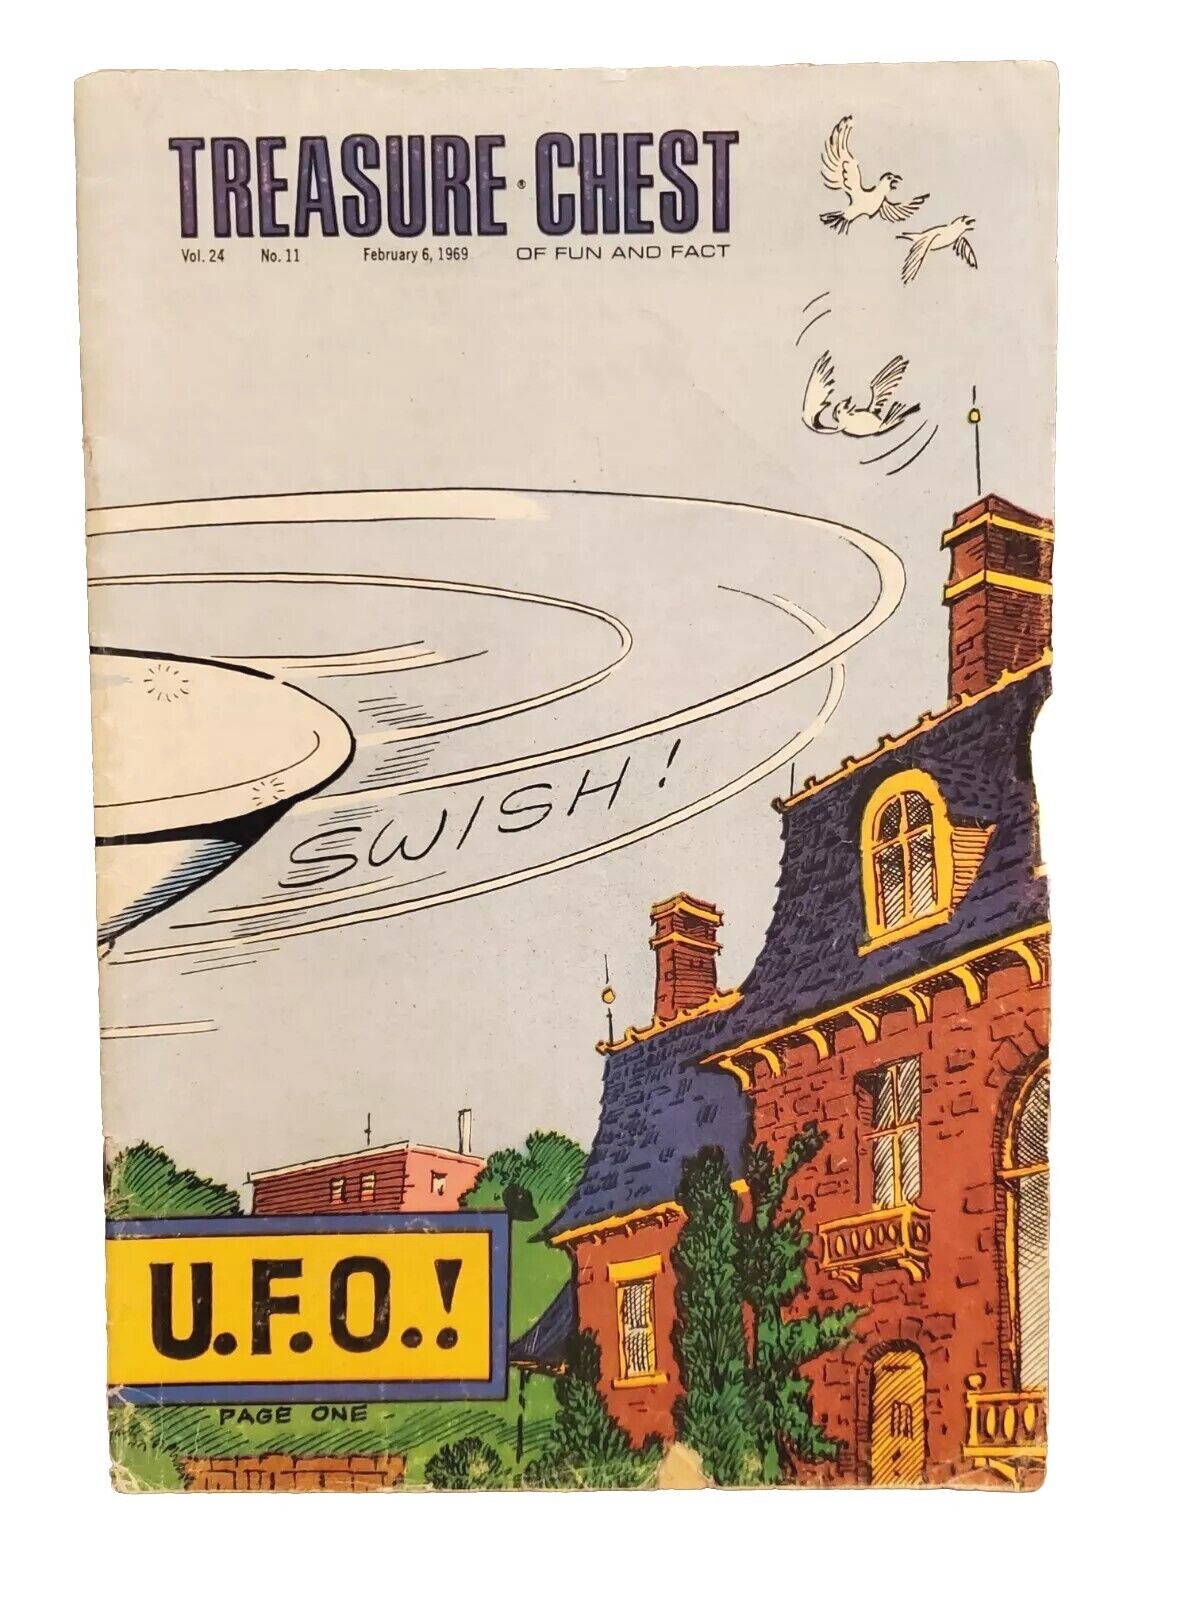 Treasure Chest of Fun and Fact (Feb 6, 1969) Vintage Comic Book - Vol  24 No 11